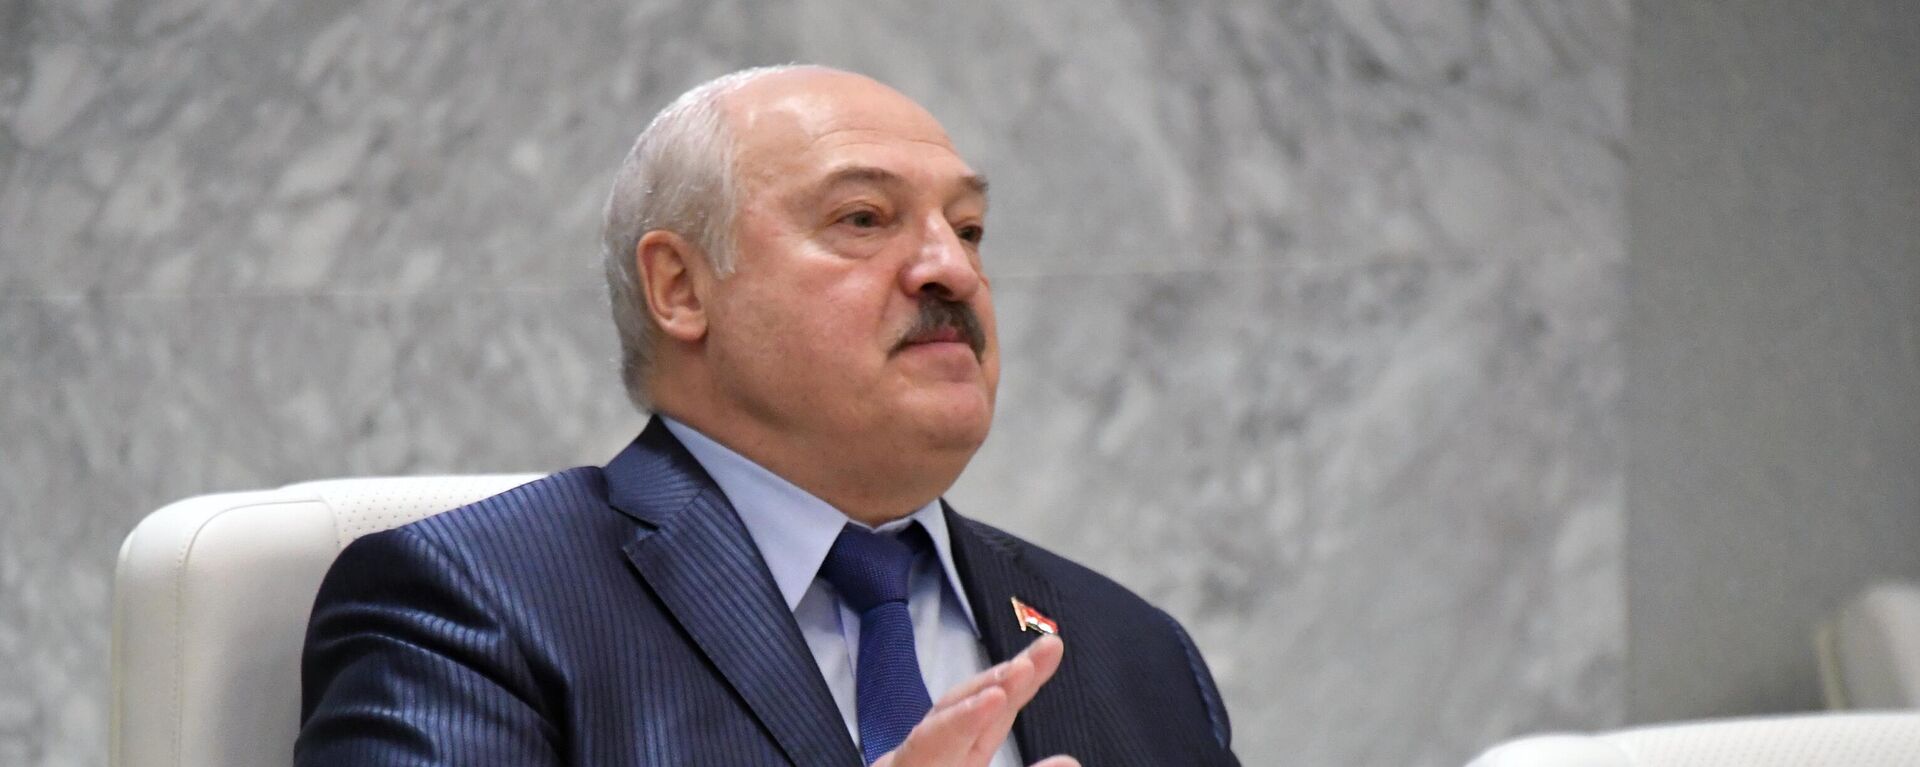 O presidente belarusso, Aleksandr Lukashenko, gesticula durante evento em Vladivostok, na Rússia, 13 de abril de 2022 - Sputnik Brasil, 1920, 01.03.2023